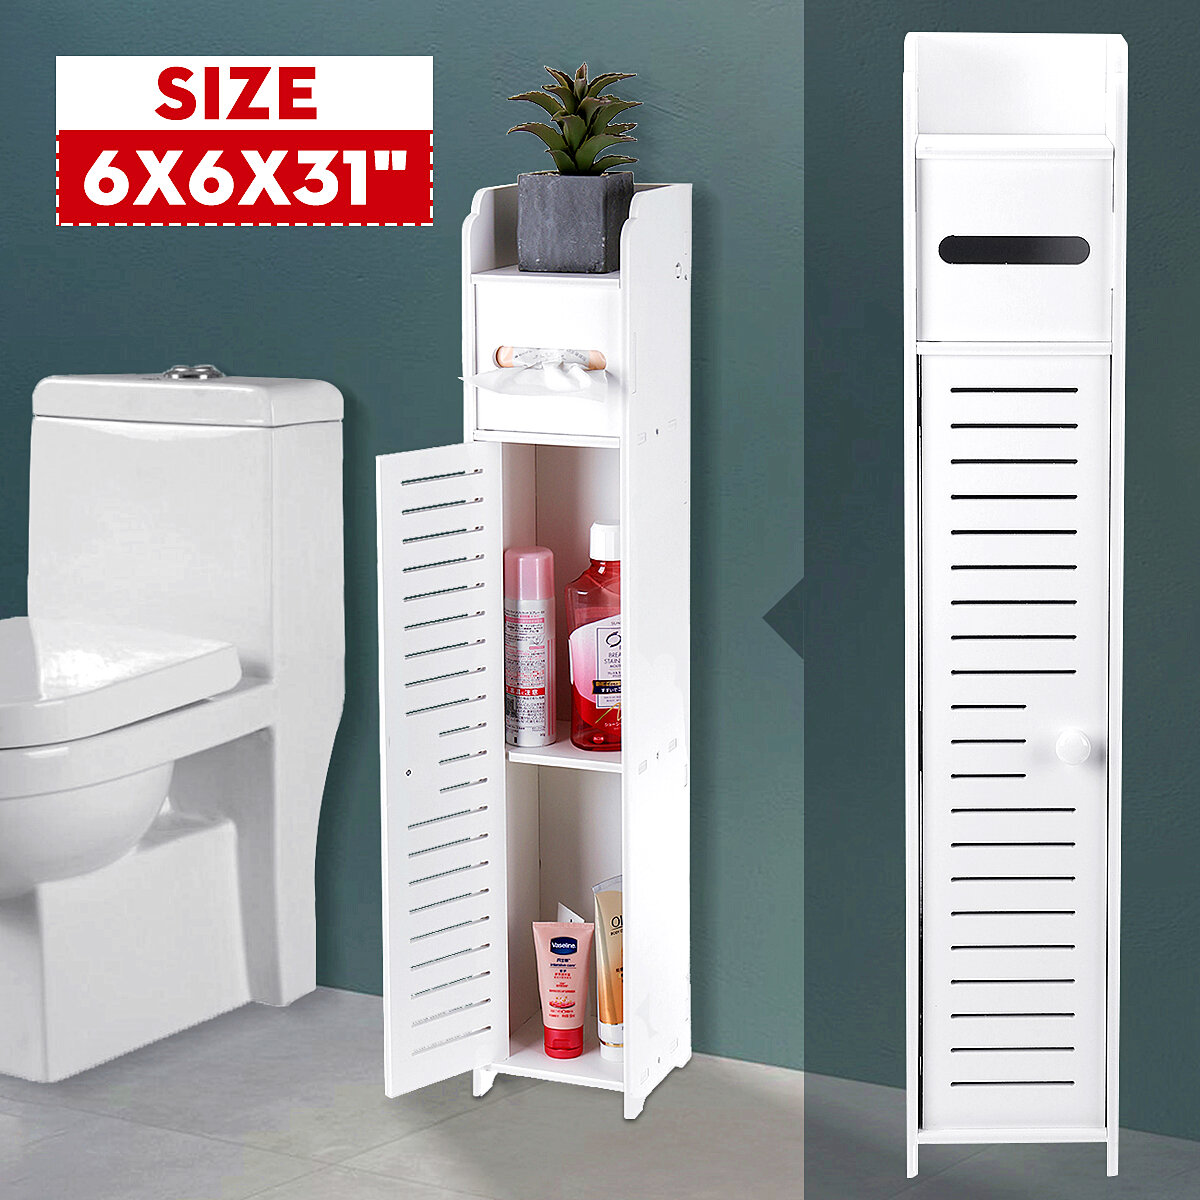 

3-Tier Standing Bathroom Cabinet Storage Organizer Floor Stand Shelve Space Save